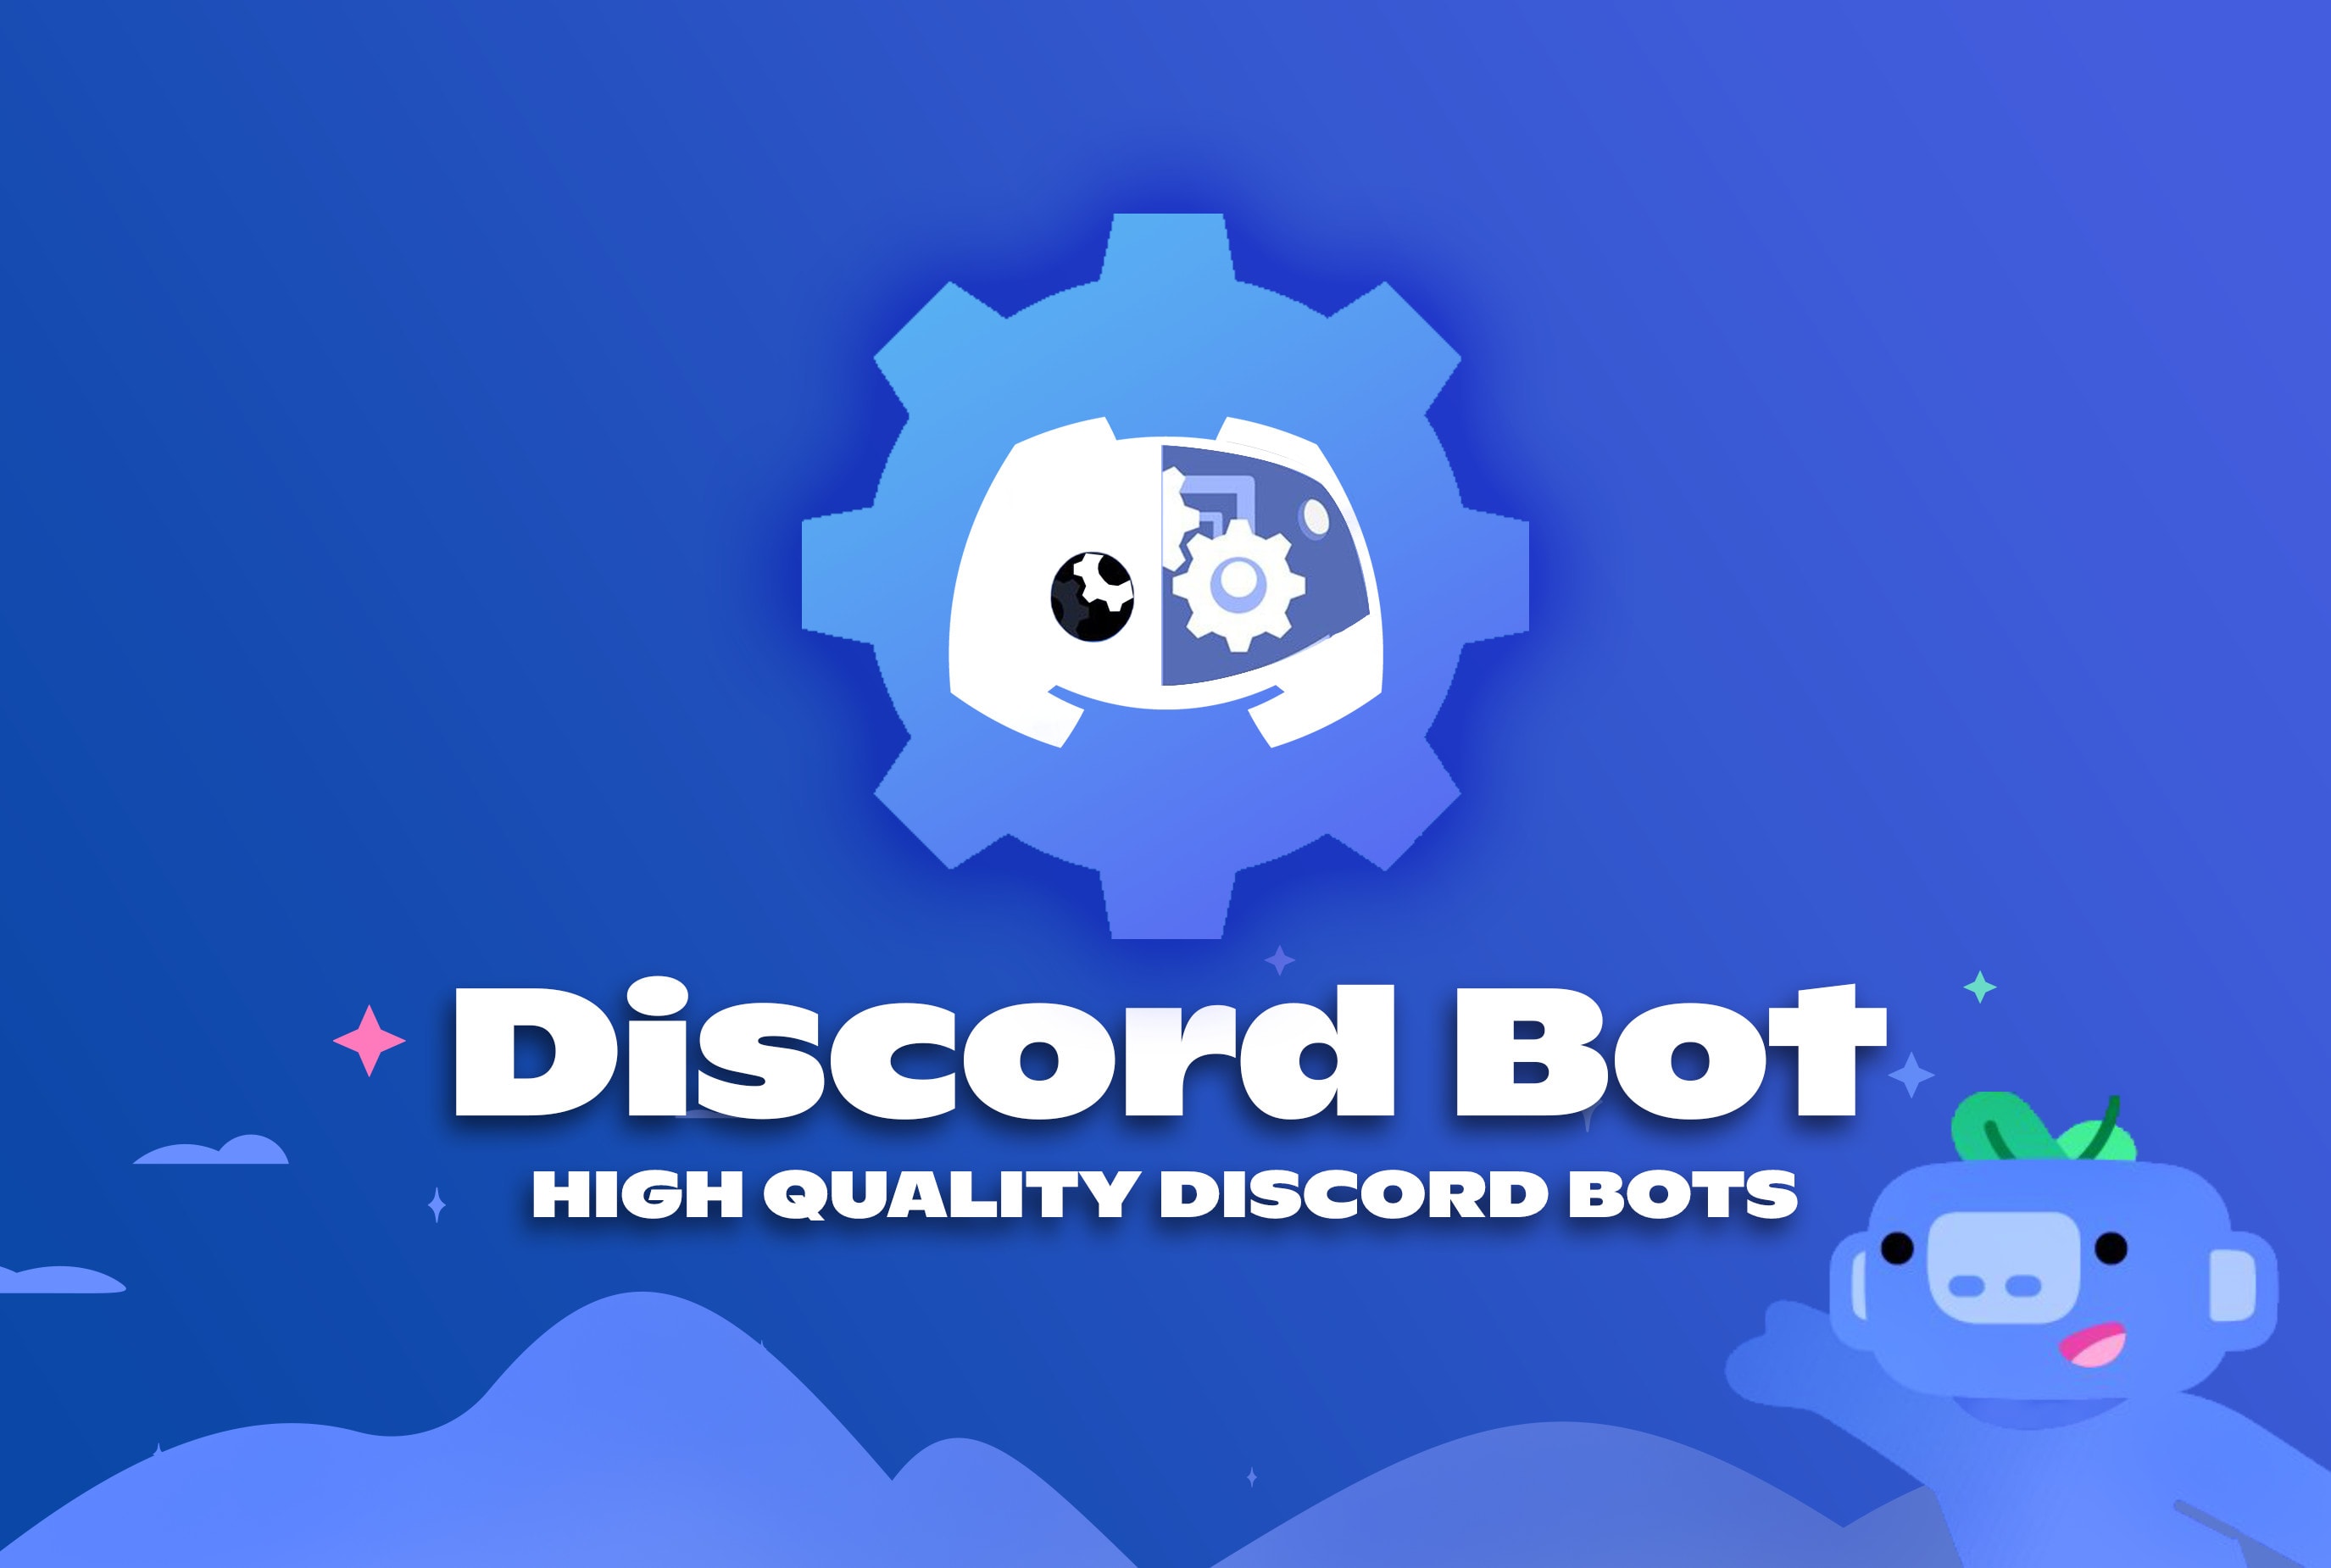 Bot related things  Discord, Development, Bot